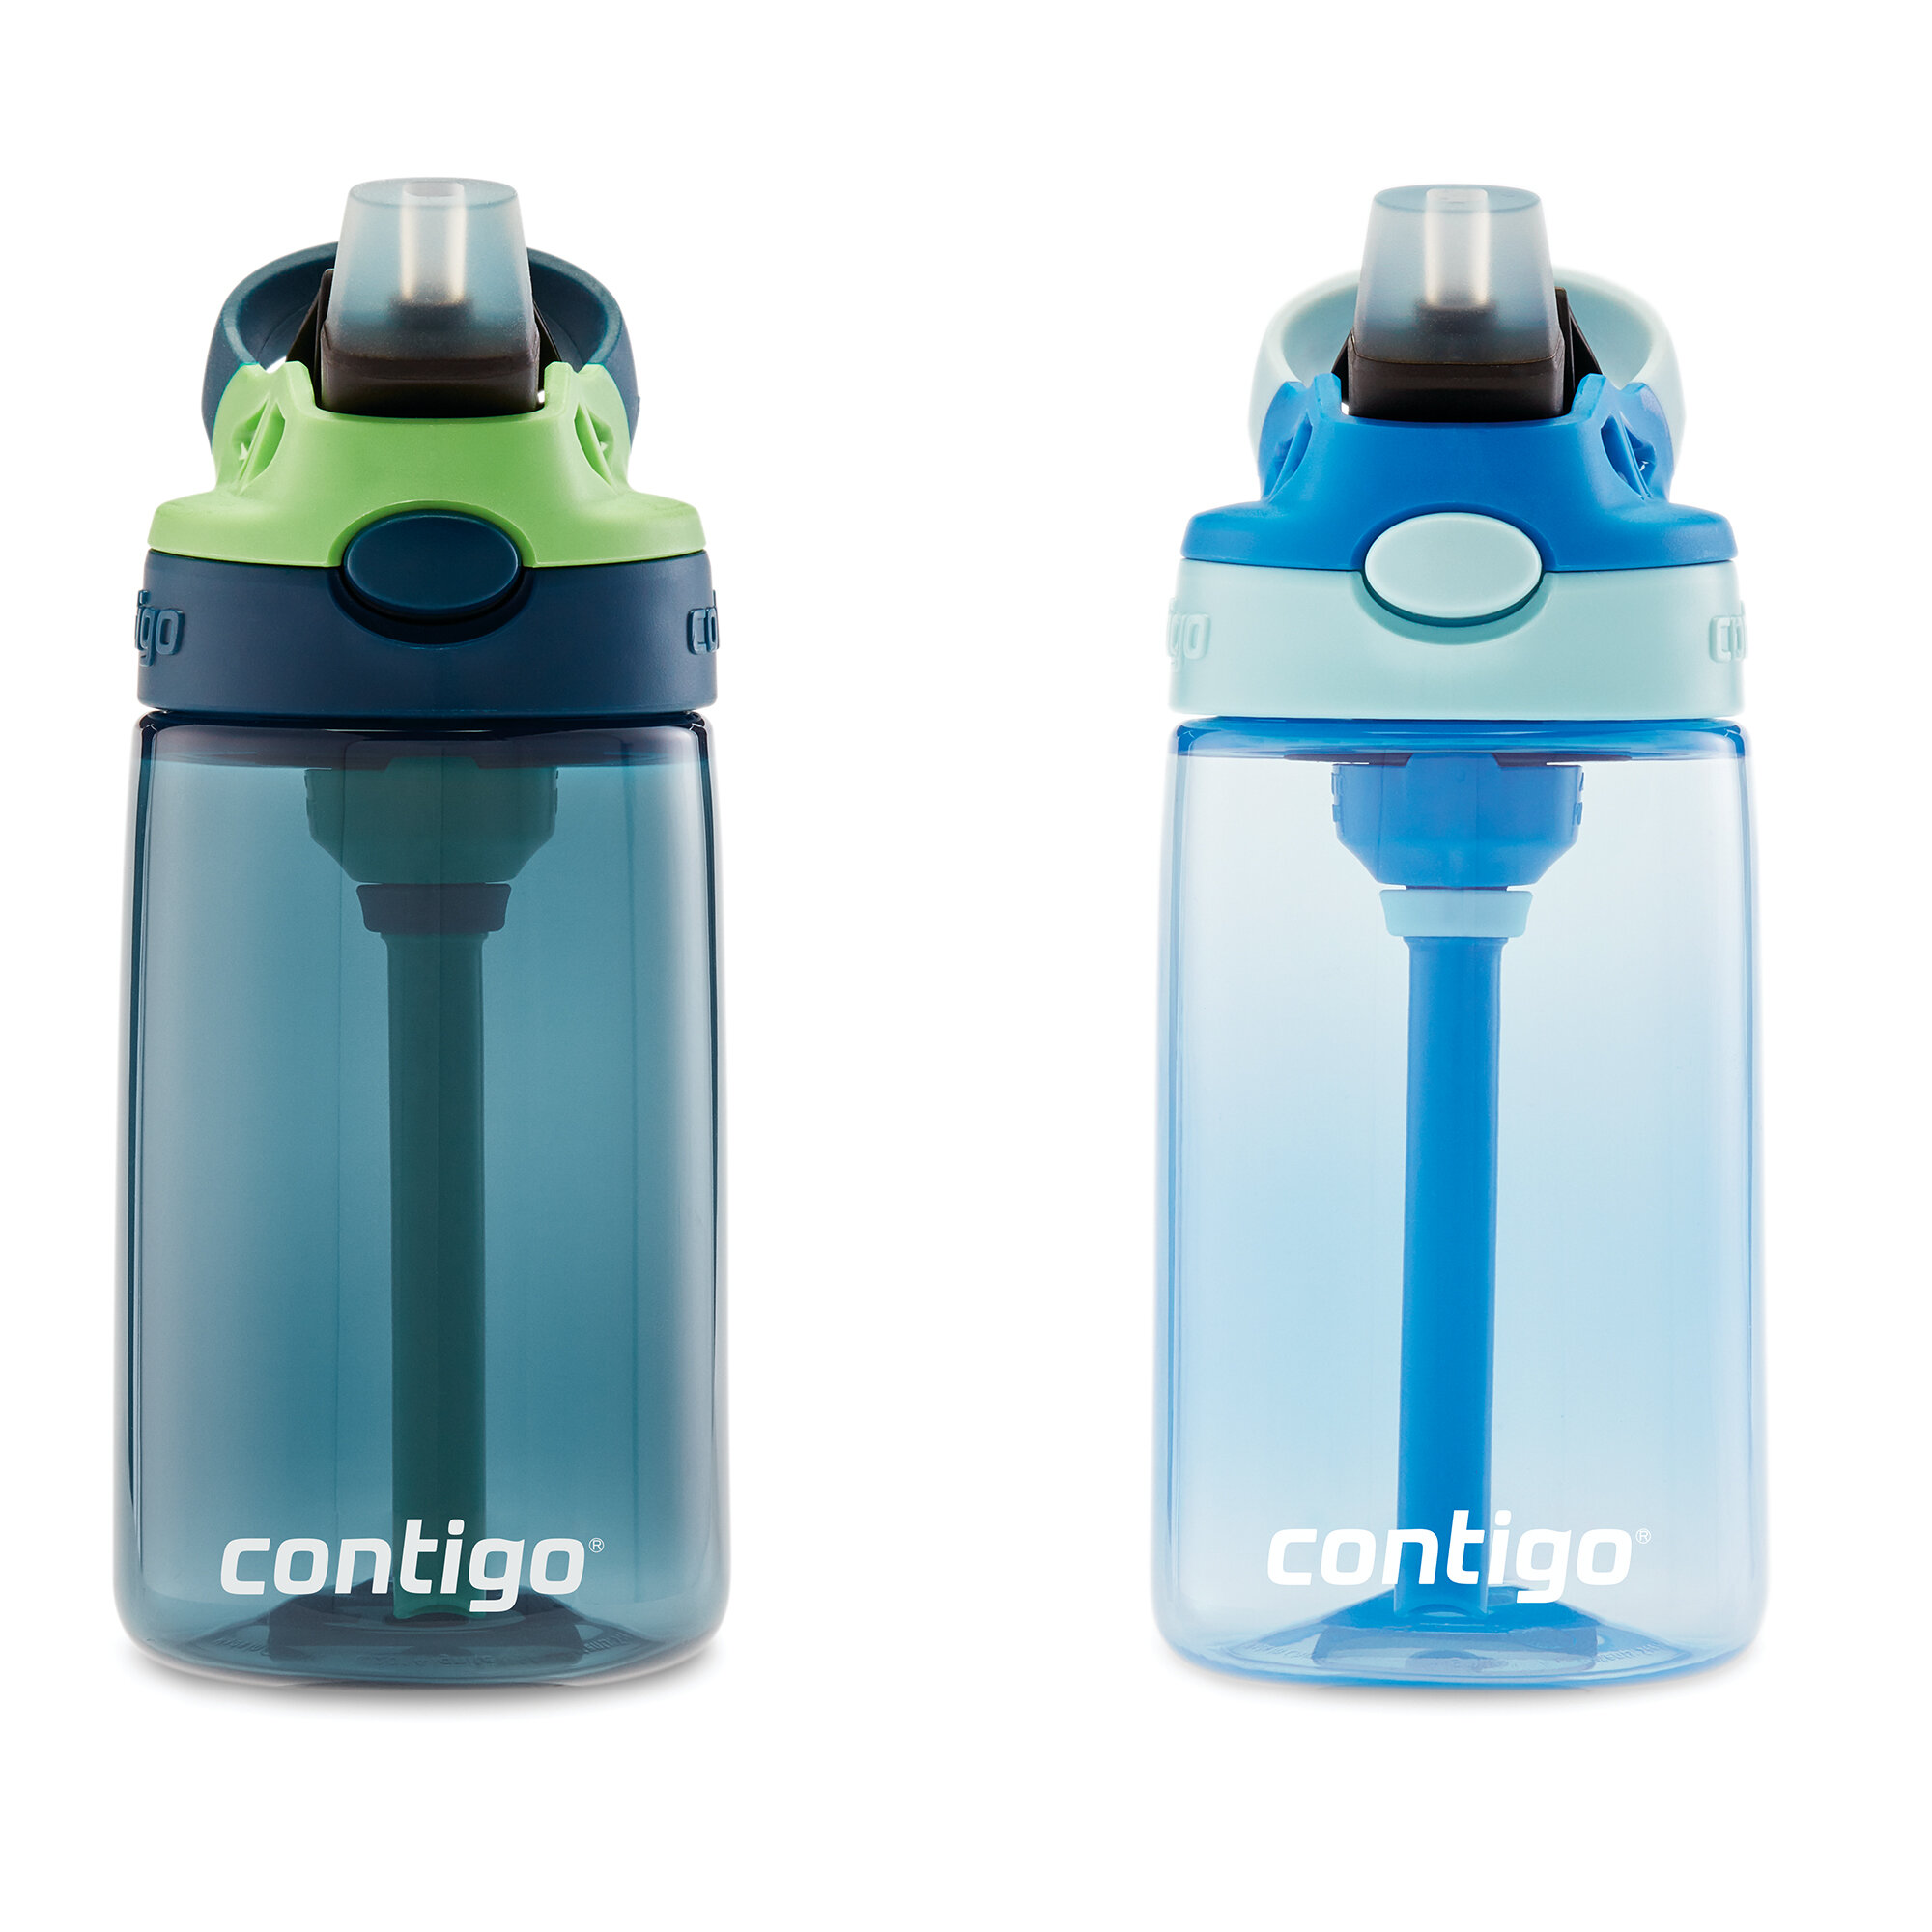 Contigo 14oz. Plastic Water Bottle & Reviews